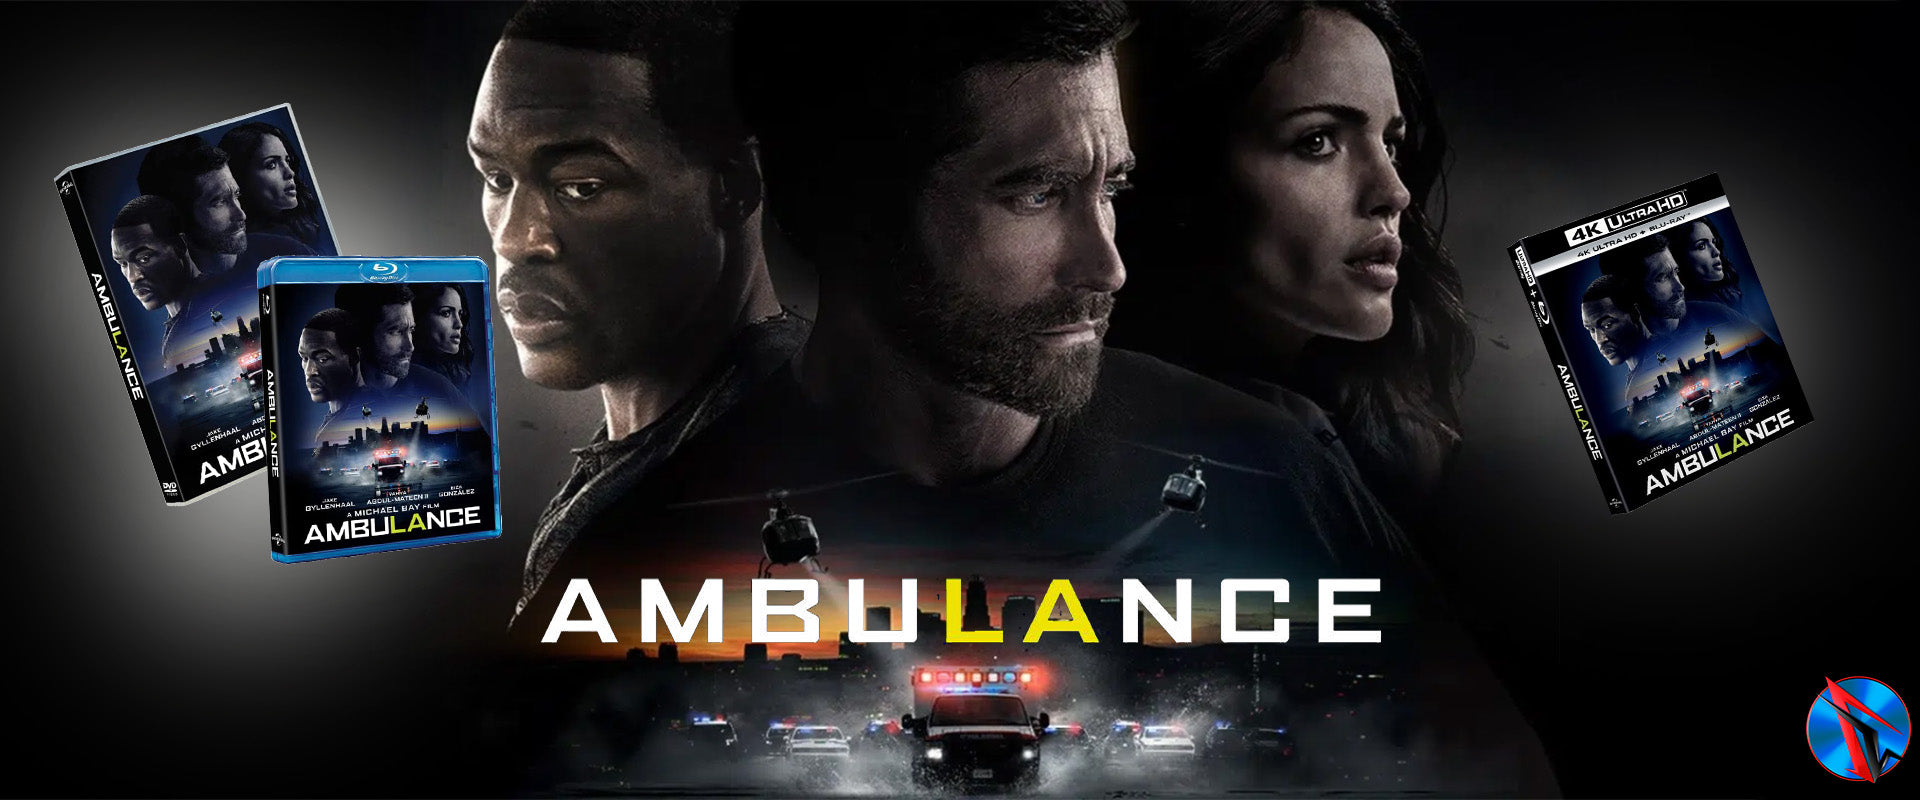 Ambulance en DVD , Blu-Ray et 4K UHD